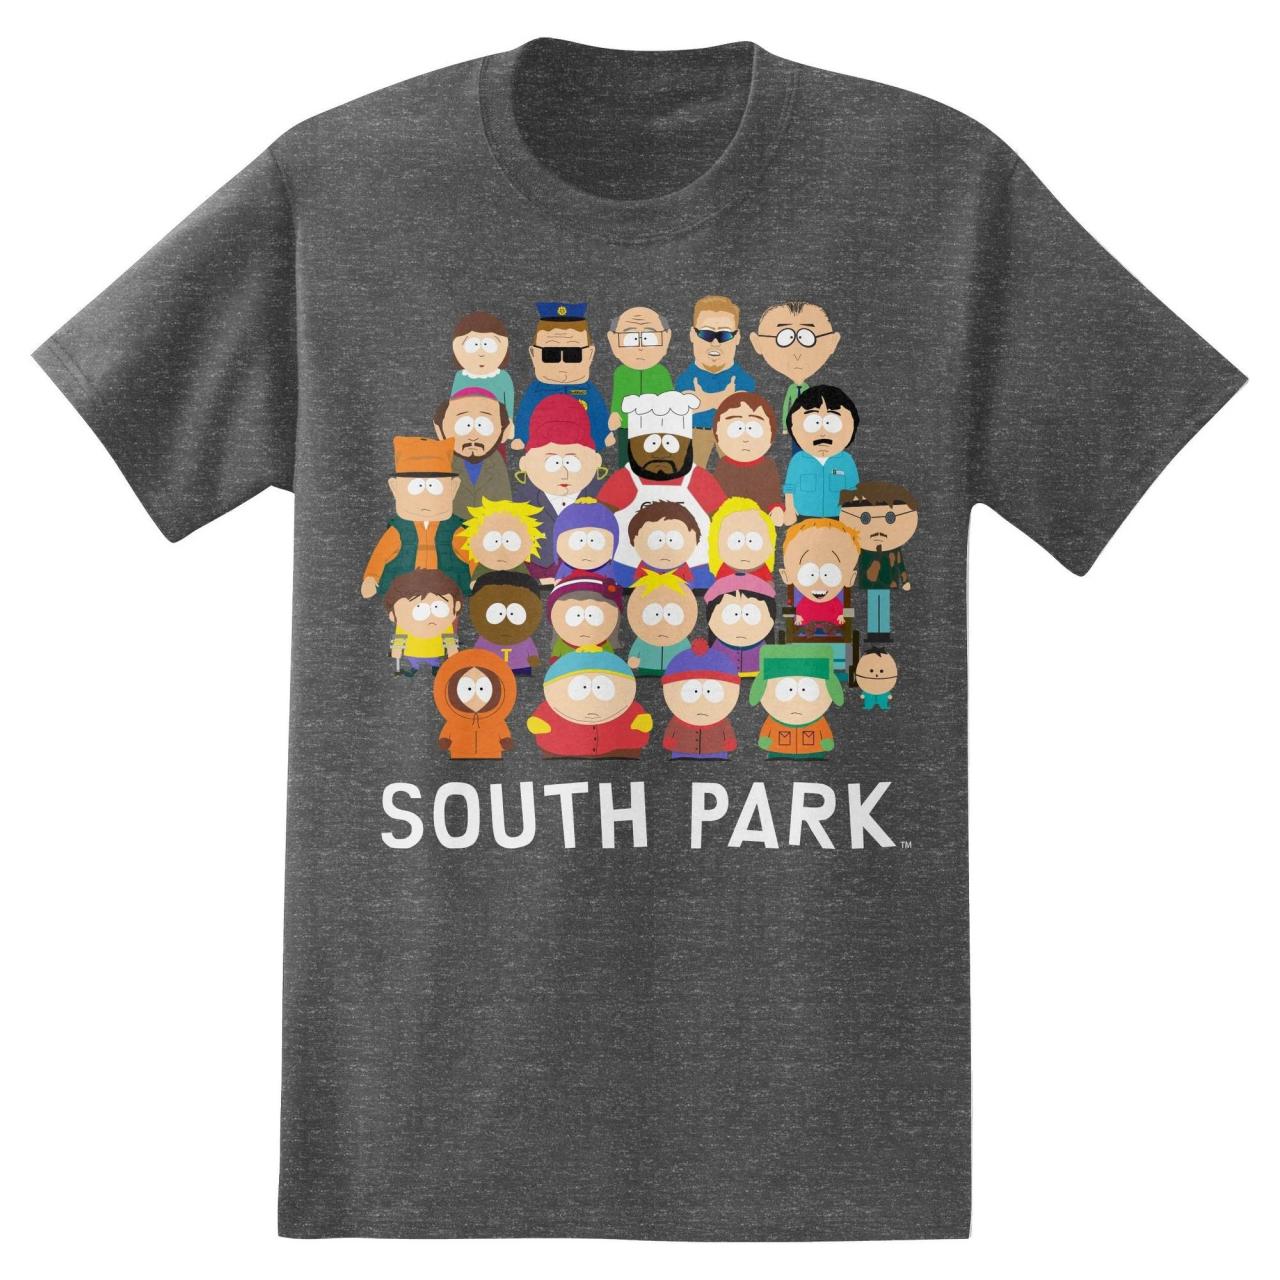 South park tee shirts